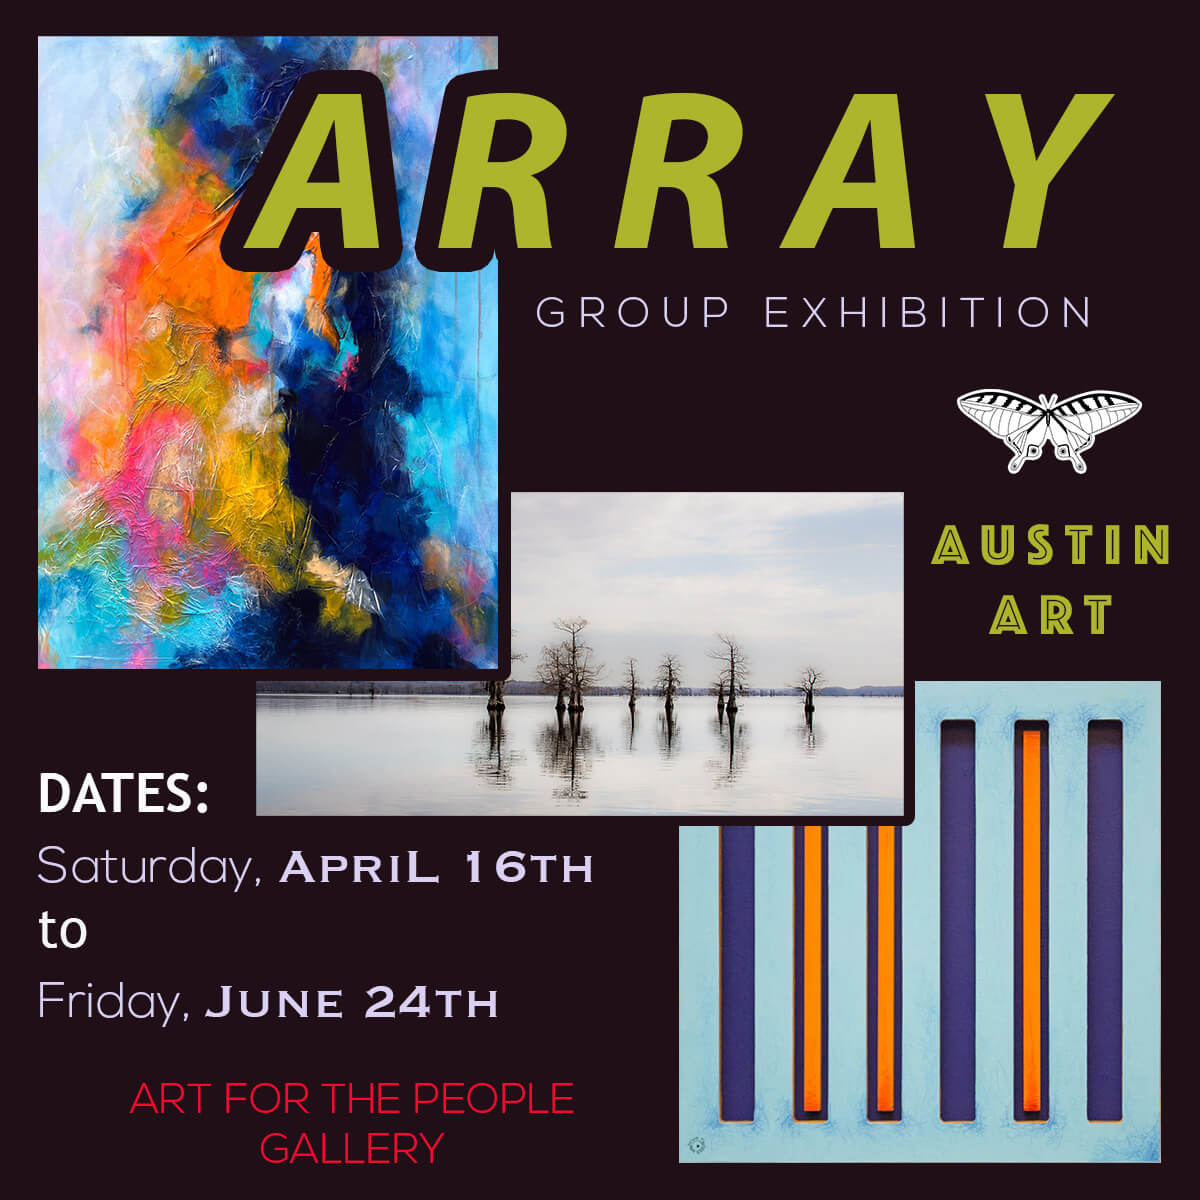 sq-array-art-for-the-people-gallery-austin-art-copy-3.jpg